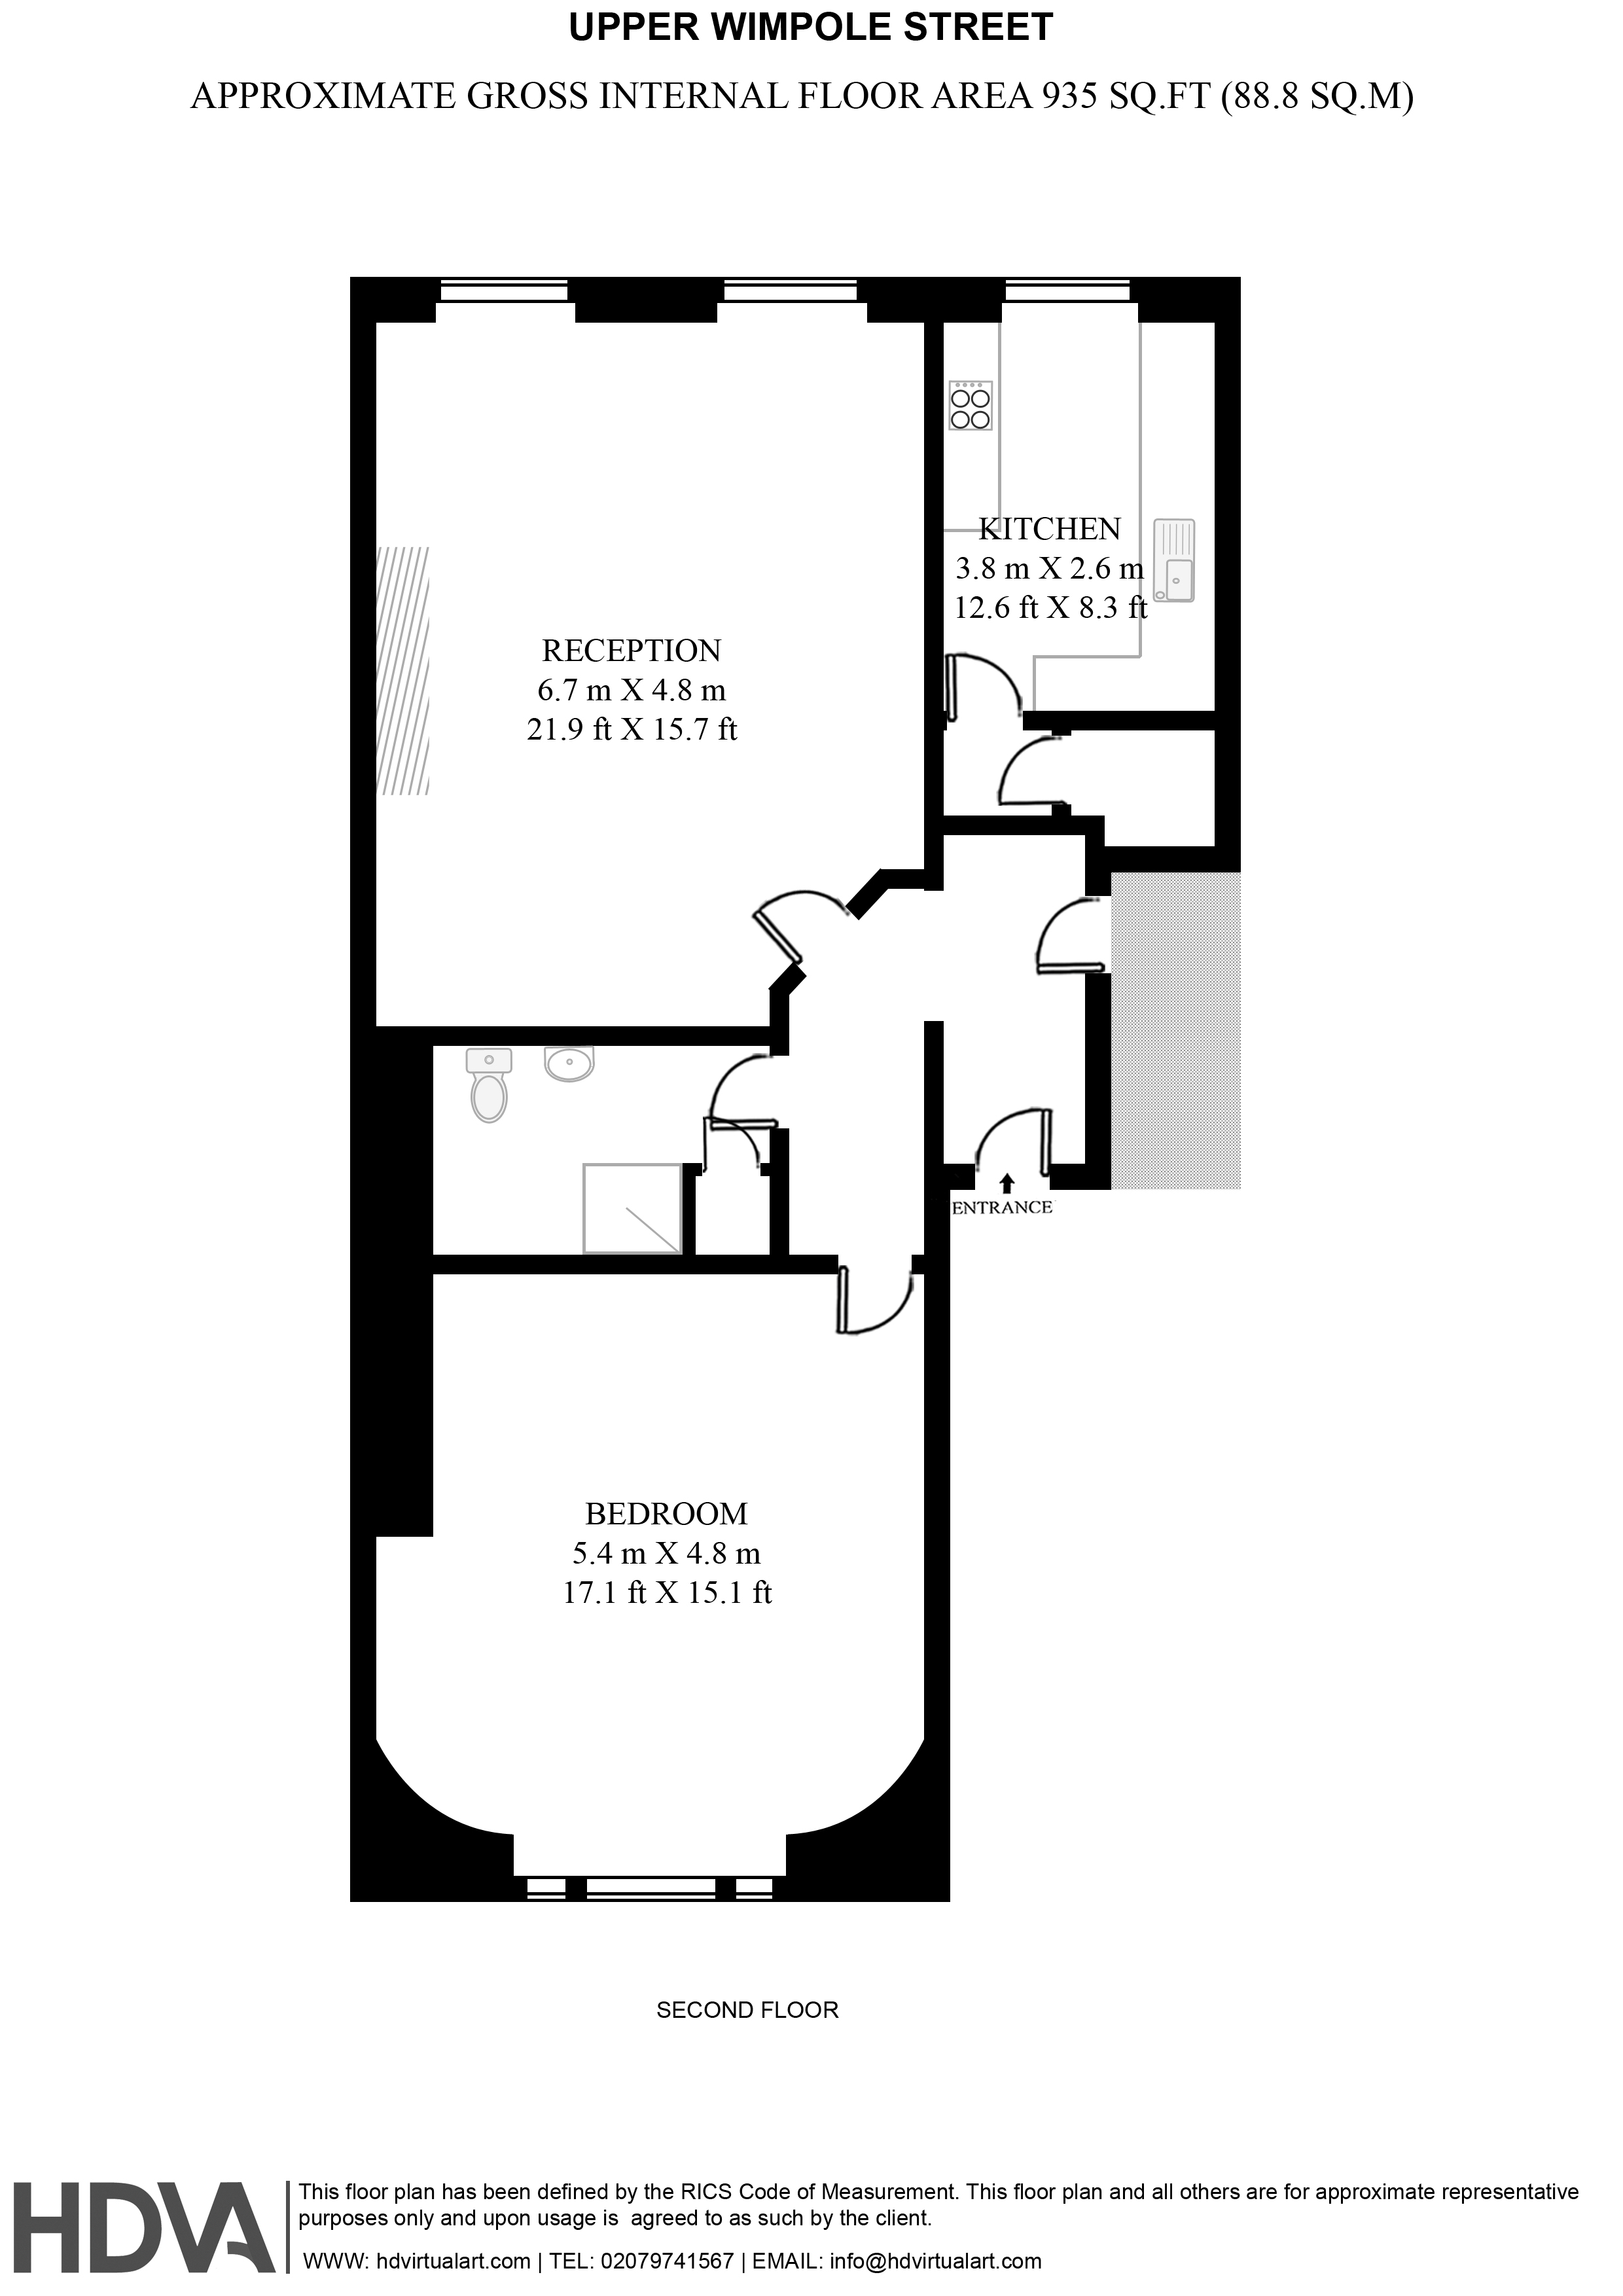 1 Bedrooms Flat to rent in Upper Wimpole Street, London W1G